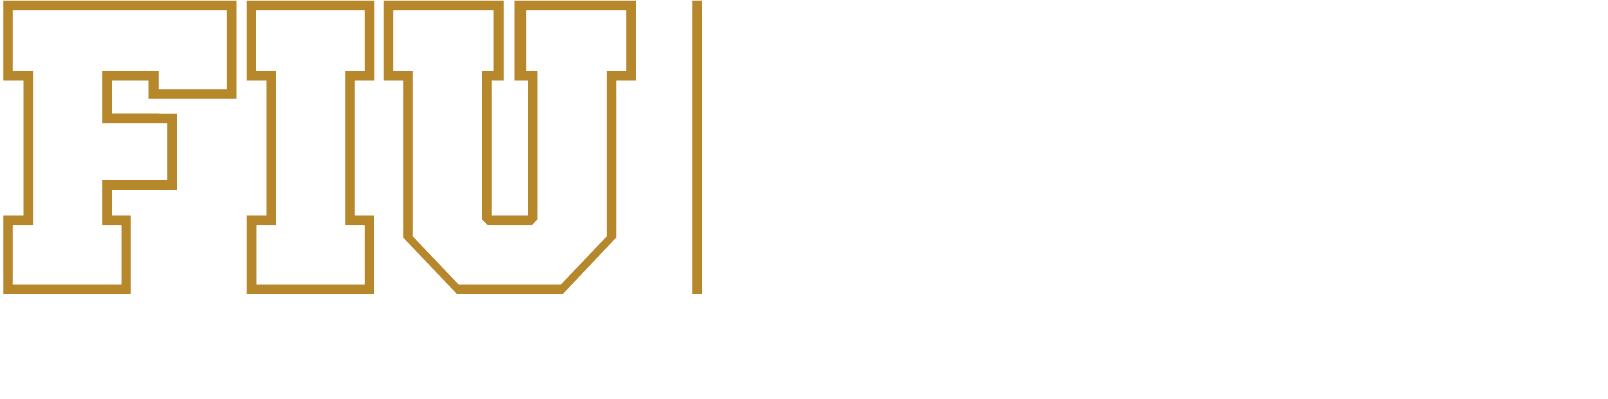 Pino-Global-Enter-Ctr-hrz-FIU-color-rev